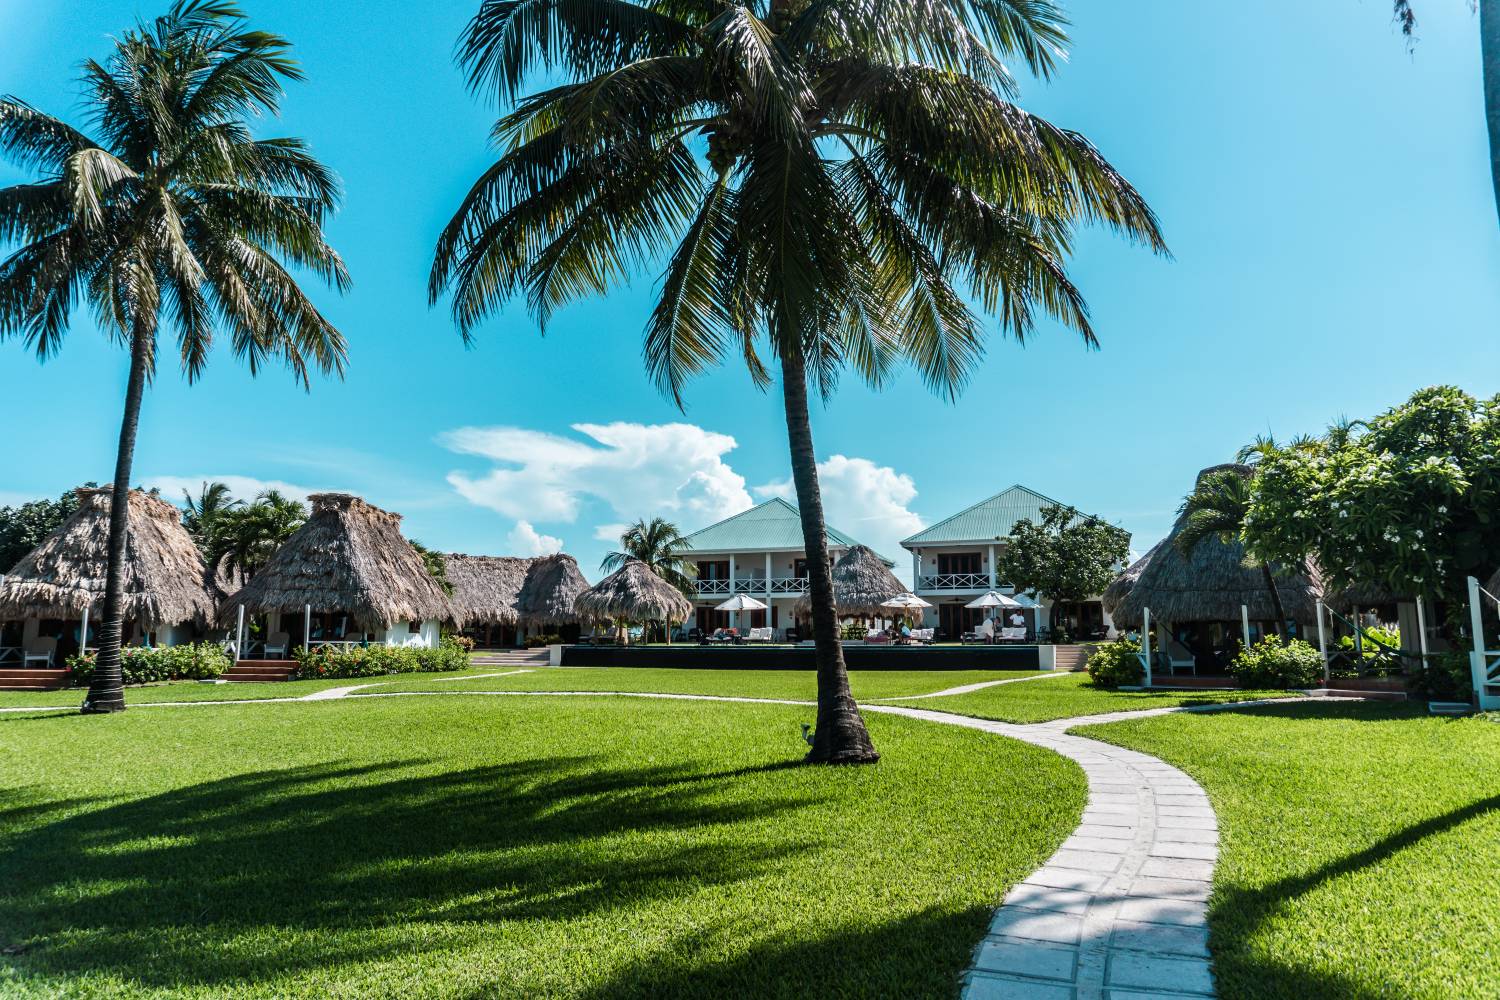 Best Luxury Belize Resort On Ambergris Caye - Victoria House